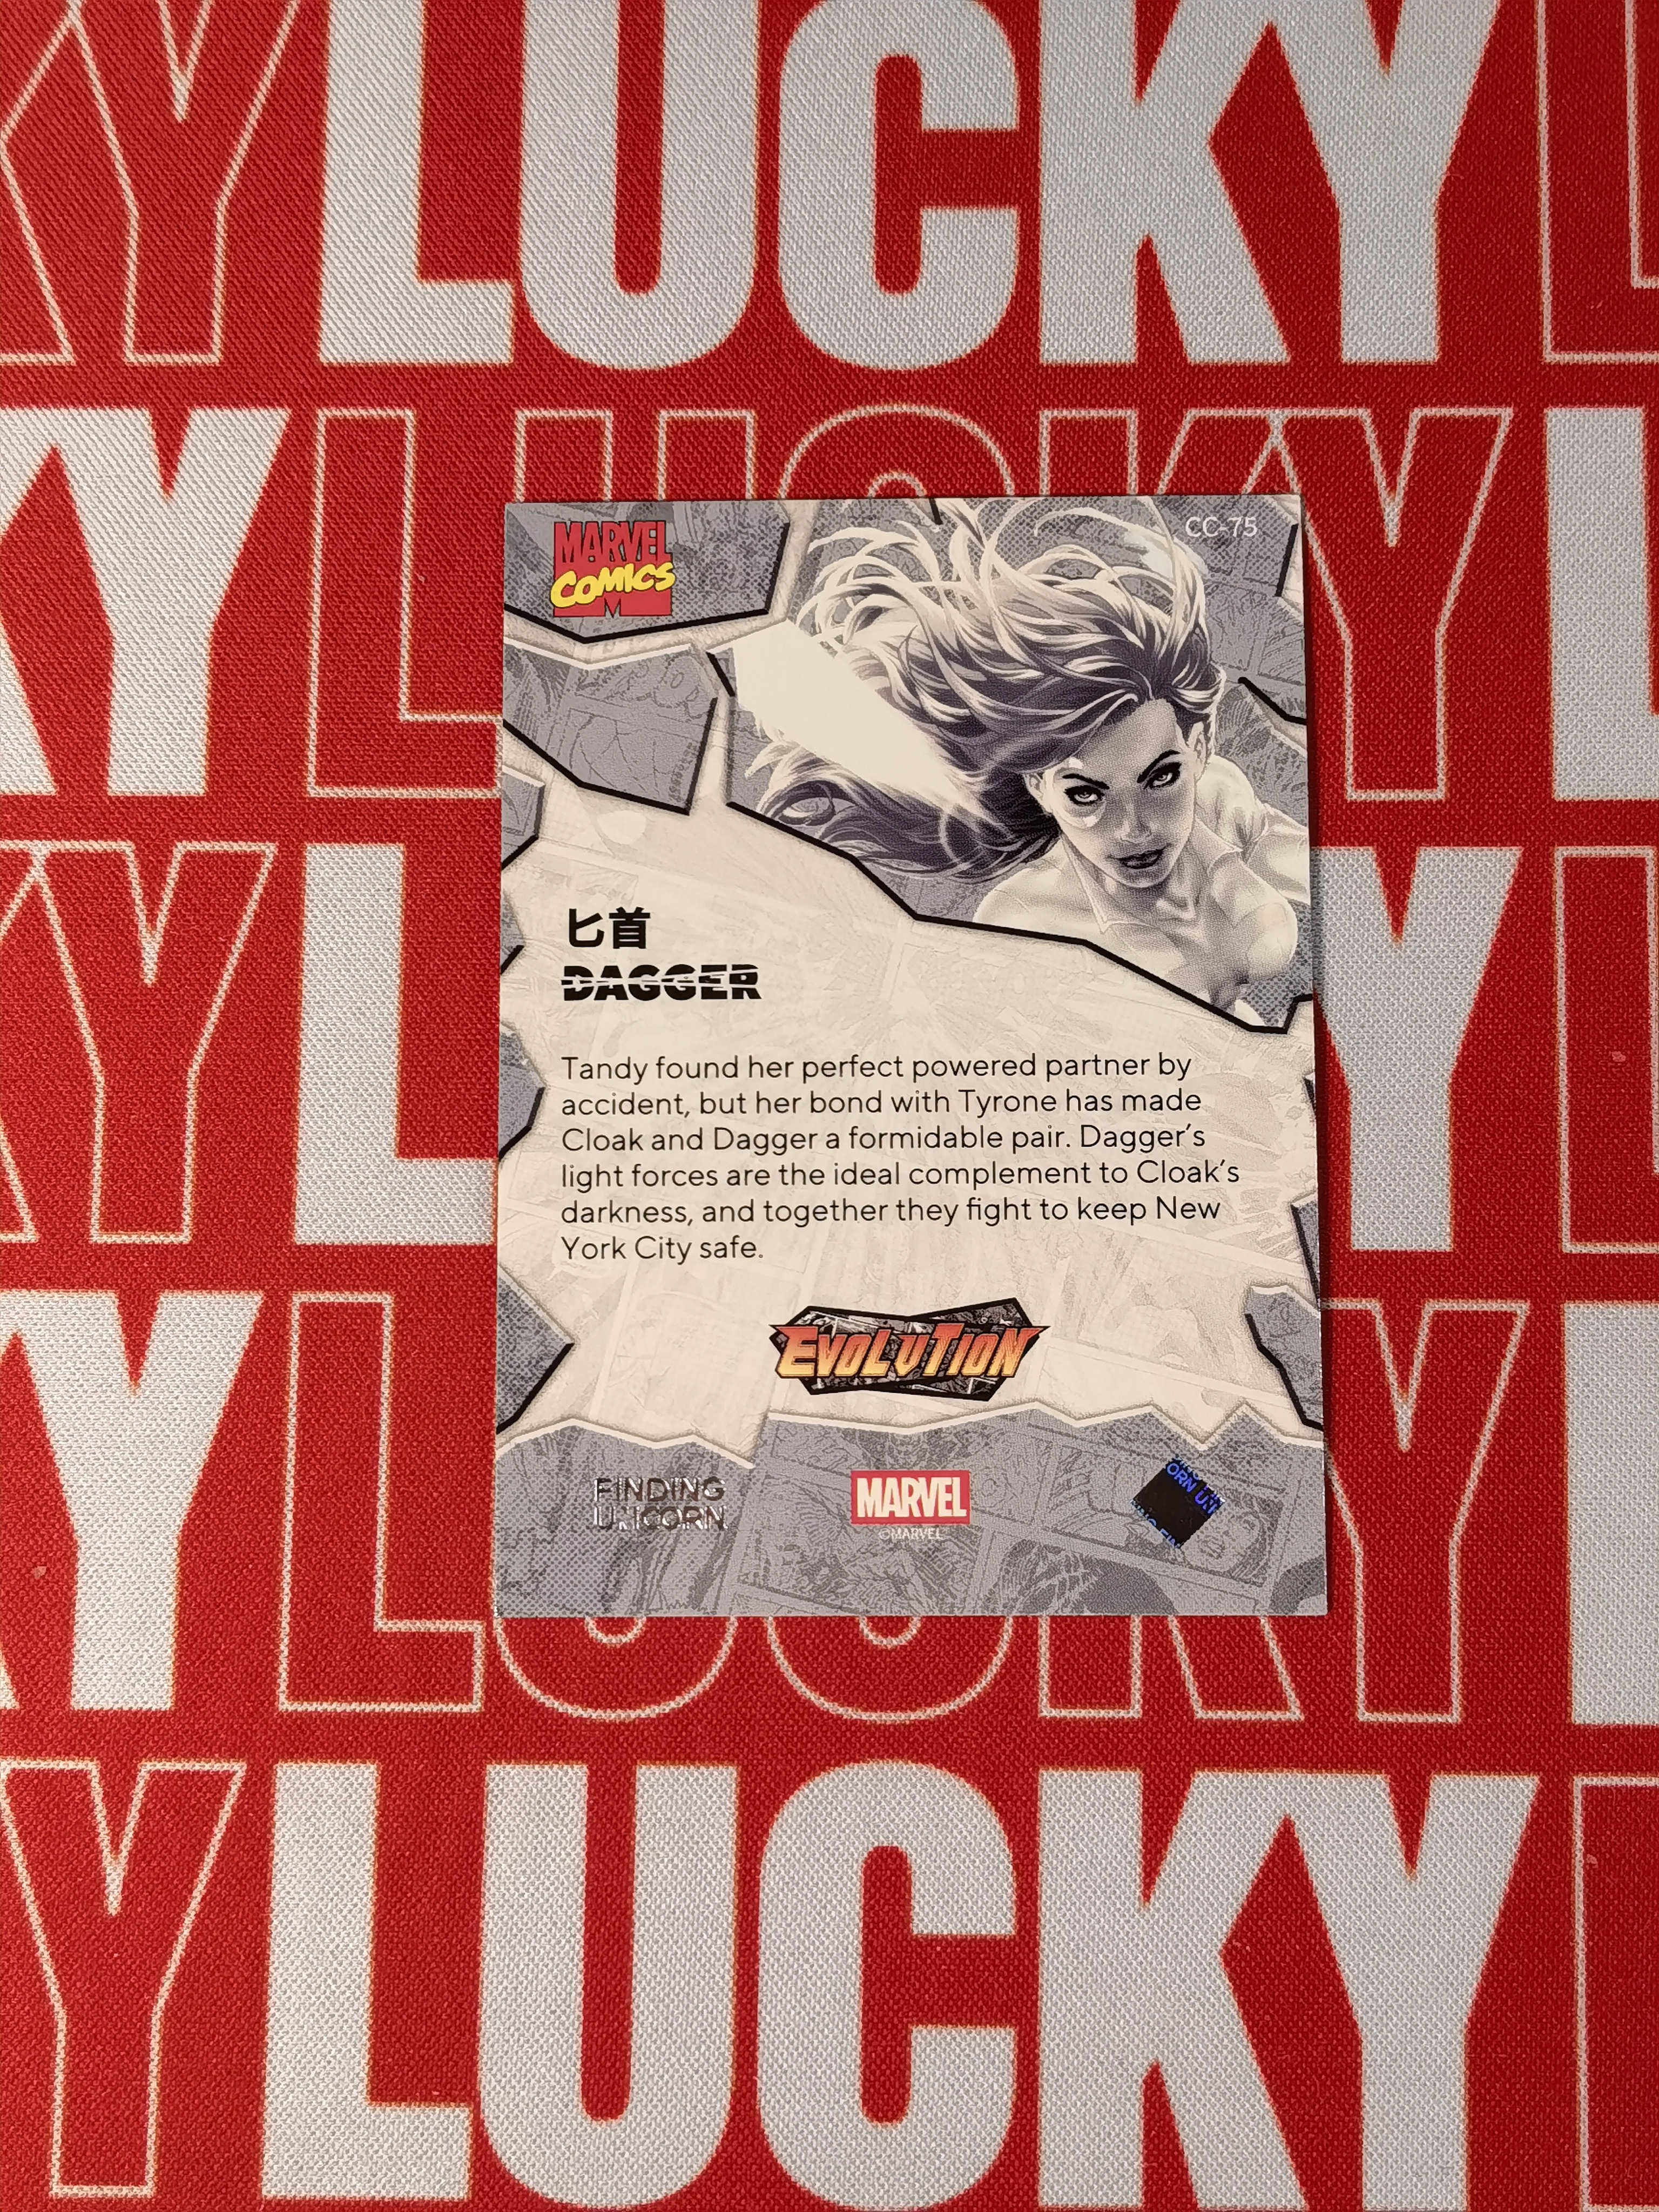 2024 FINDING CARD Marvel (MCU) Evolution 【Lucky7】寻卡 寻找独角兽 漫威漫画宇宙 演变系列 1:96大比例复联折 复仇者联盟烫金折 #75 匕首